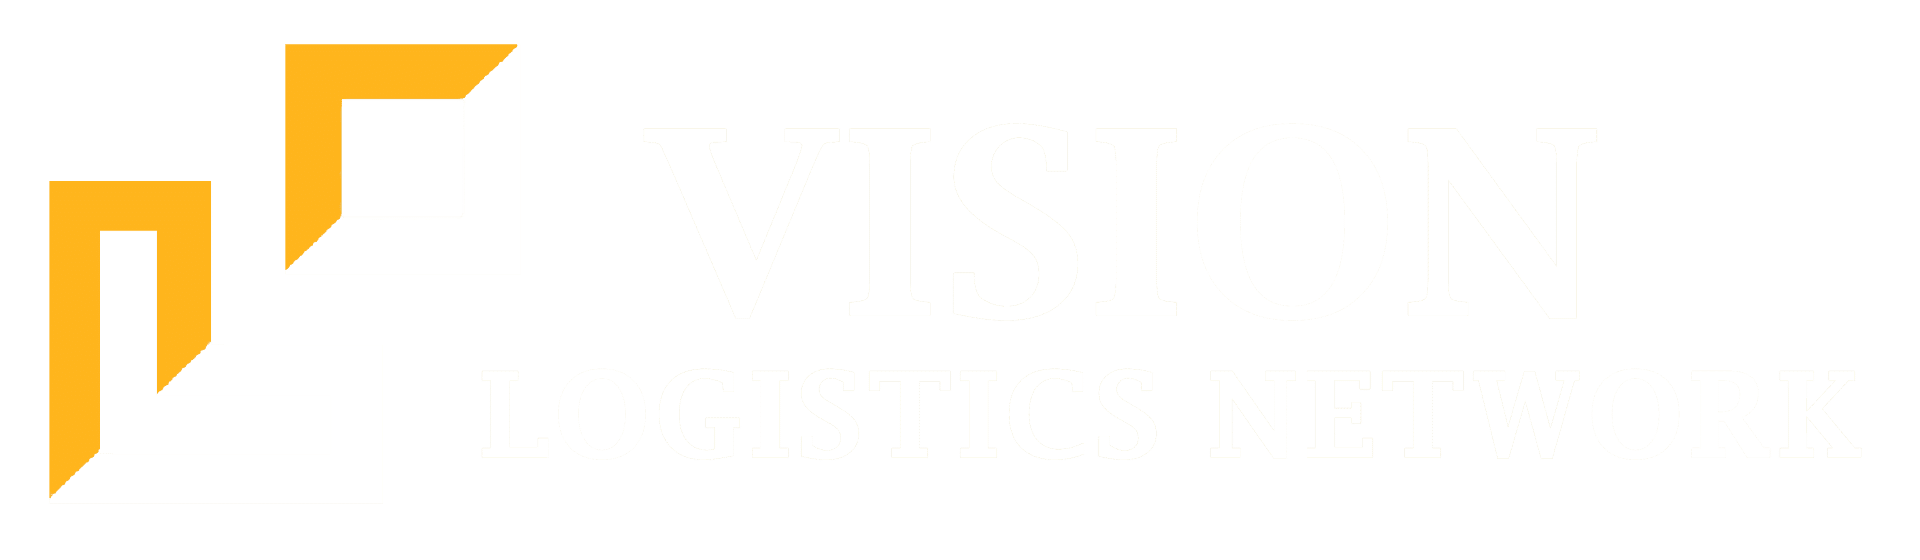 vision-logistics-network-logo-invert